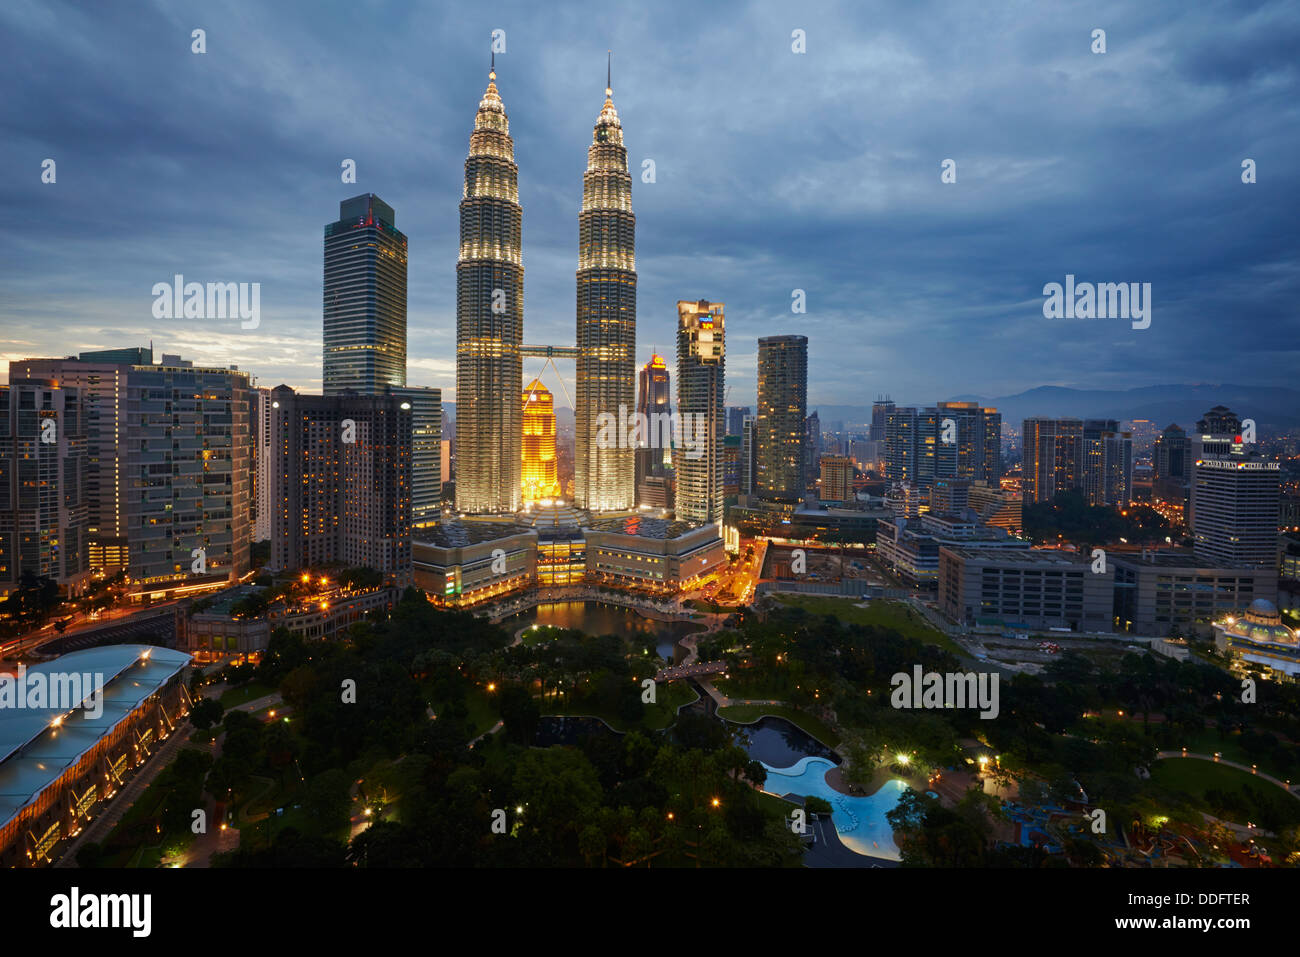 Malaysia, Selangor state, Kuala Lumpur, KLCC (Kuala Lumpur City Center), Petronas towers Stock Photo